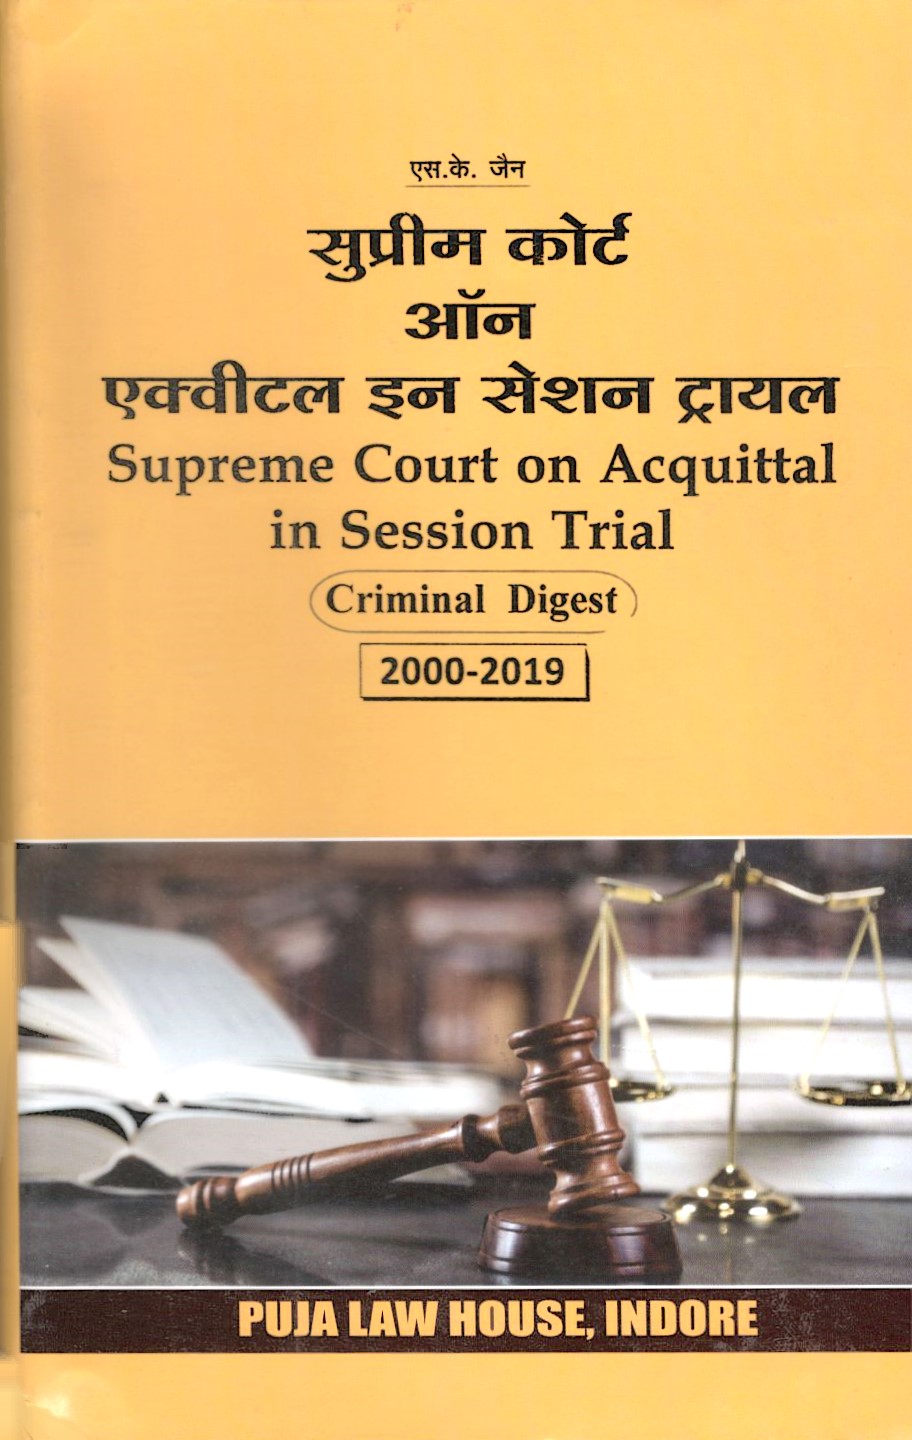 सुप्रीम कोर्ट ऑन एक्वीटल इन सेशन ट्रायल 2000-2019 / Supreme Court on Acquittal in Session Trial 2000-2019